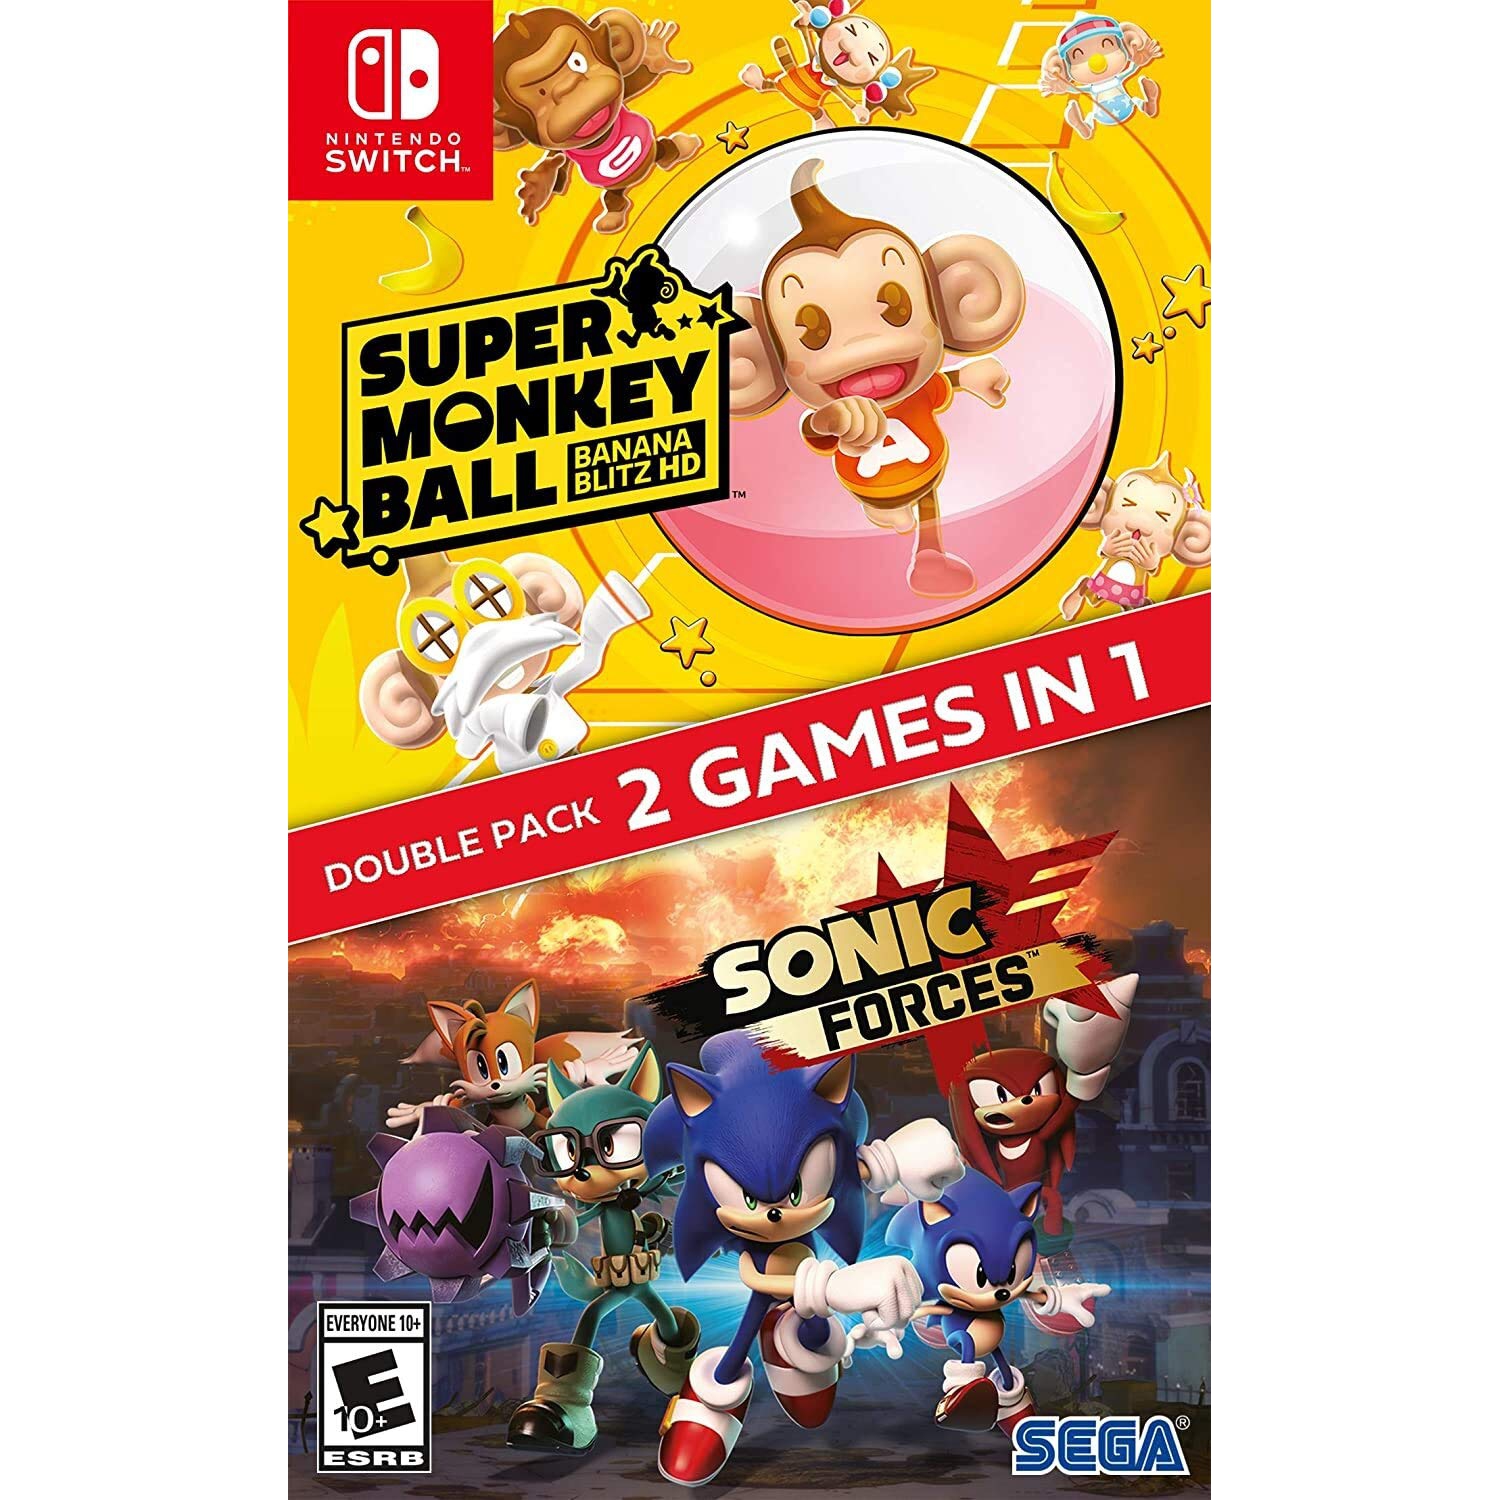 Sonic Forces + Super Monkey Ball: Banana Blitz HD Double Pack - Nintendo Switch